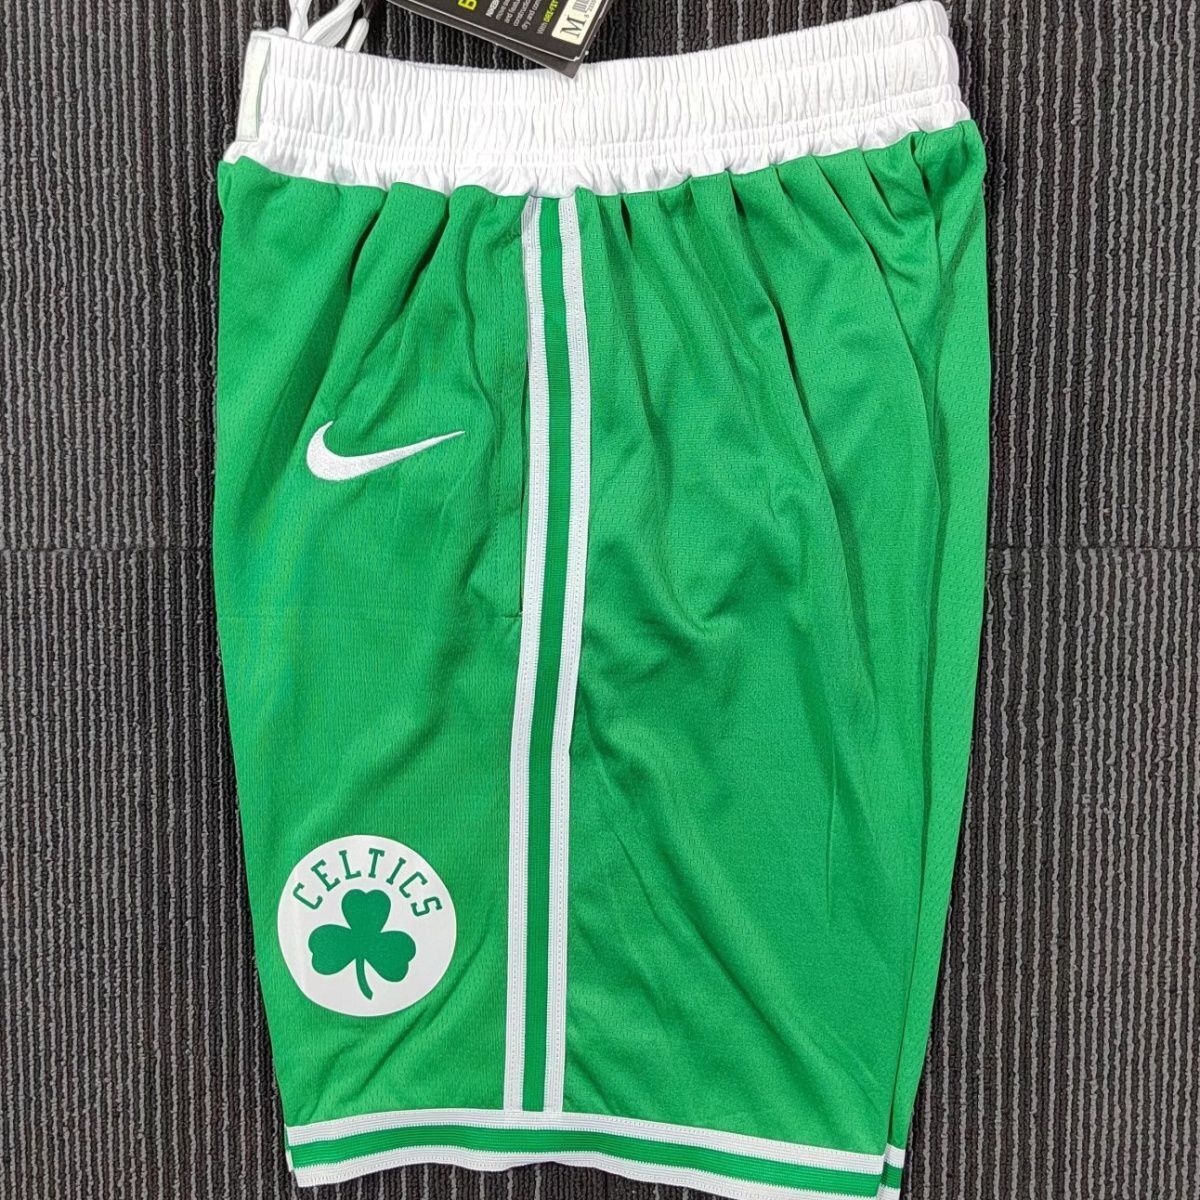 Celtics Team Shorts